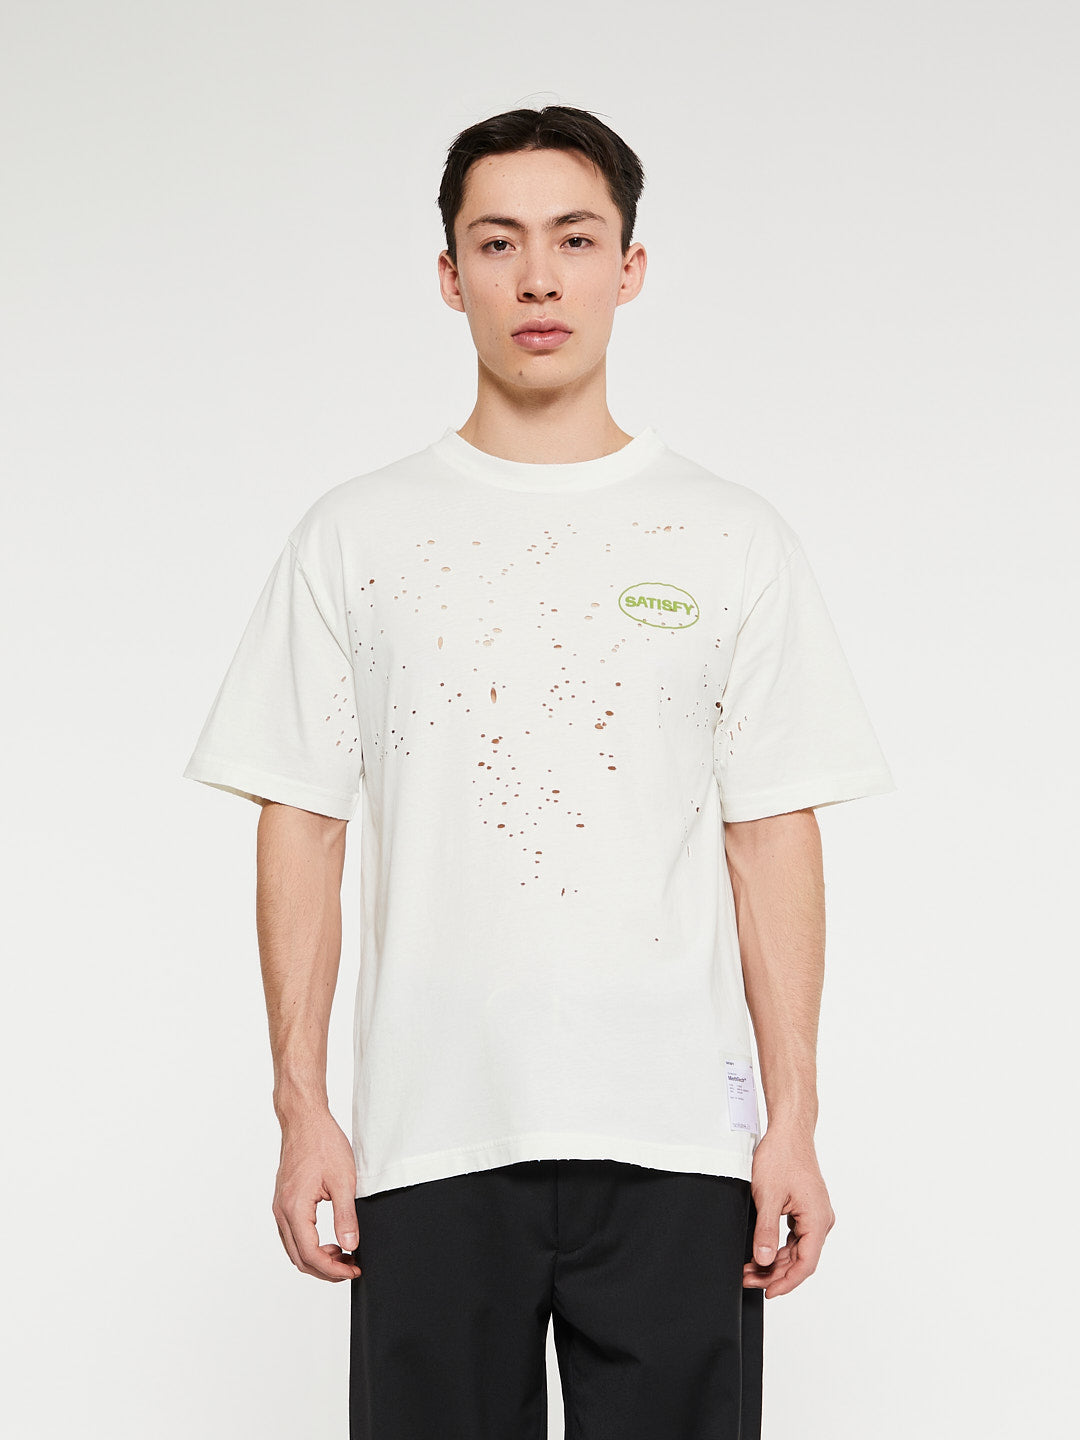 Satisfy - MothTech T-Shirt in Off-White